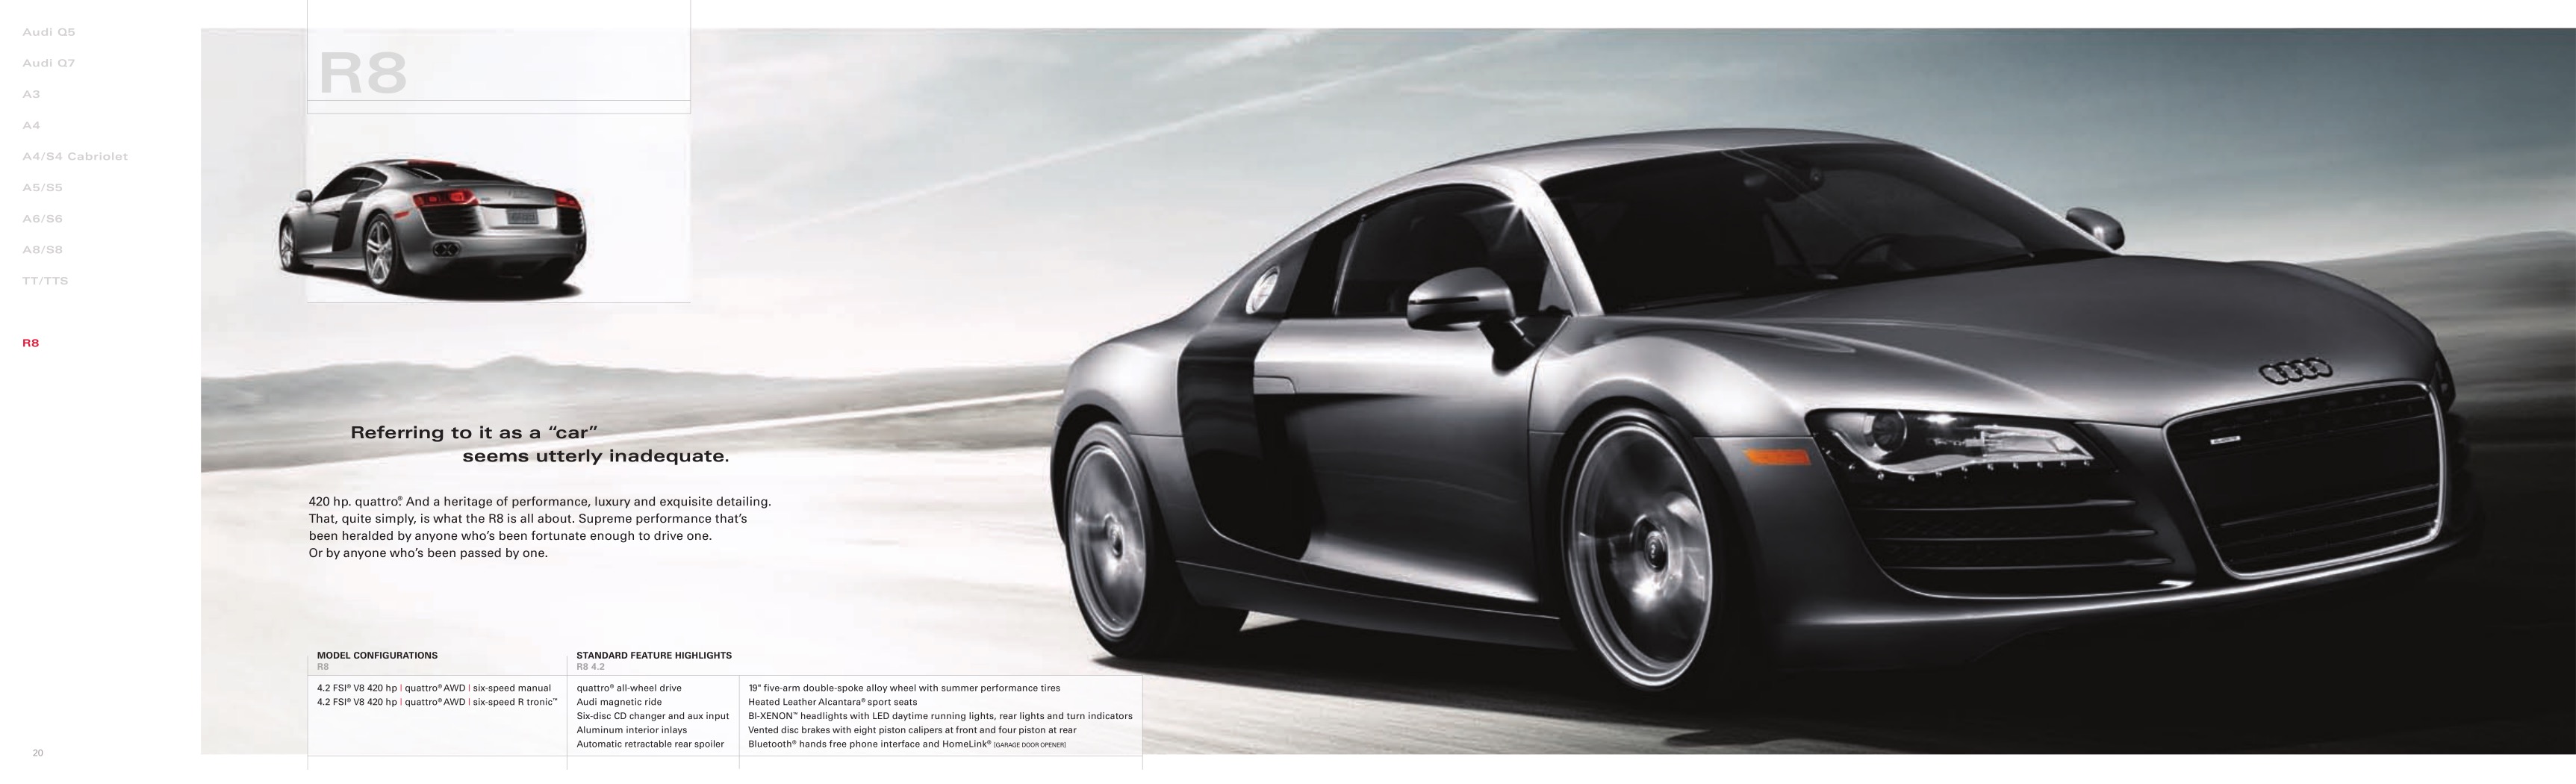 2009 Audi Brochure Page 16